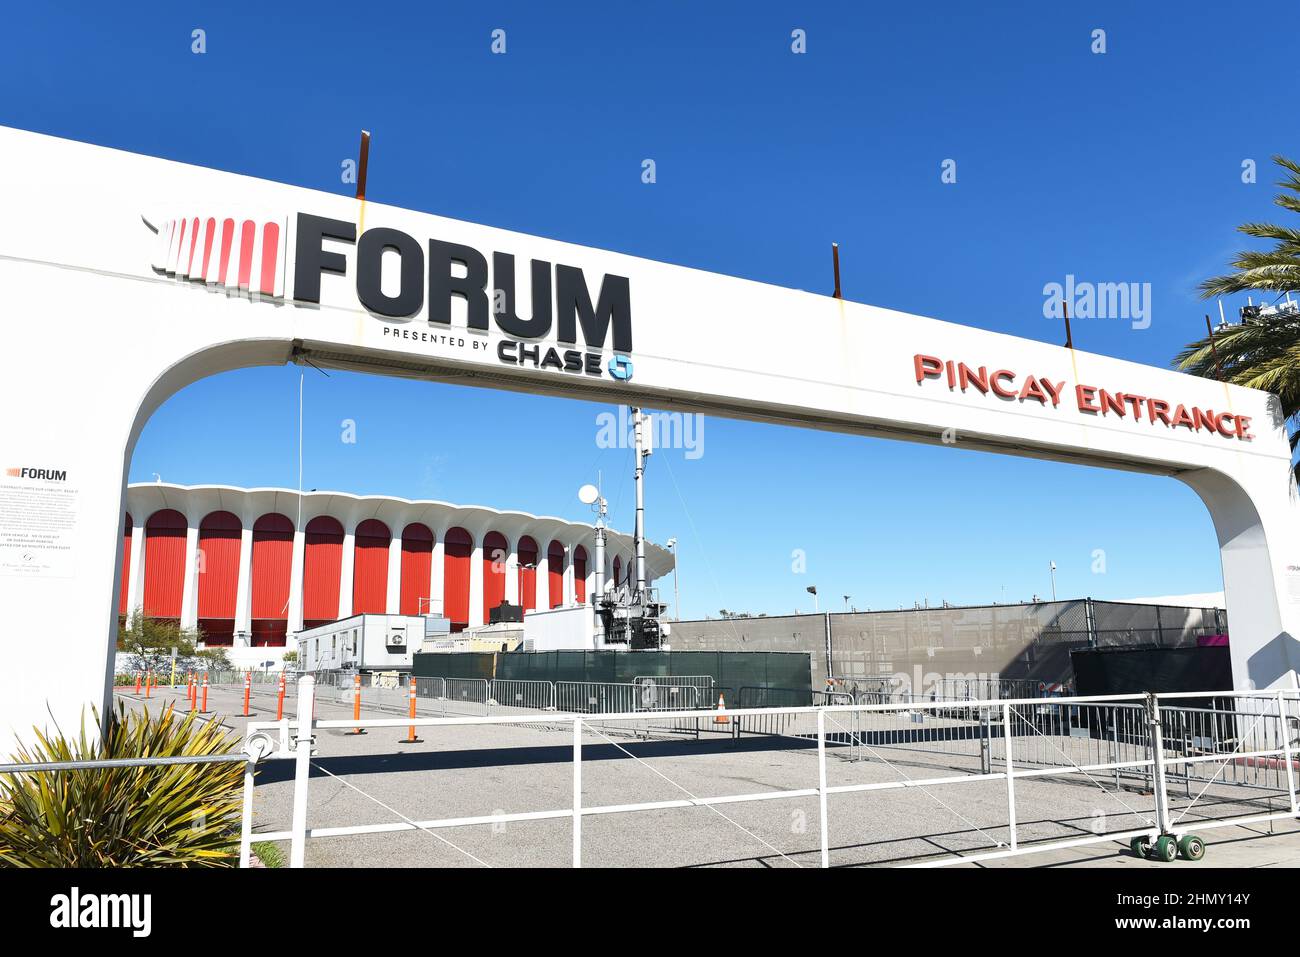 INGLEWOOD, CALIFORNIA - 12 FEB 2022: L'ingresso di Pincay all'arena del Forum Foto Stock